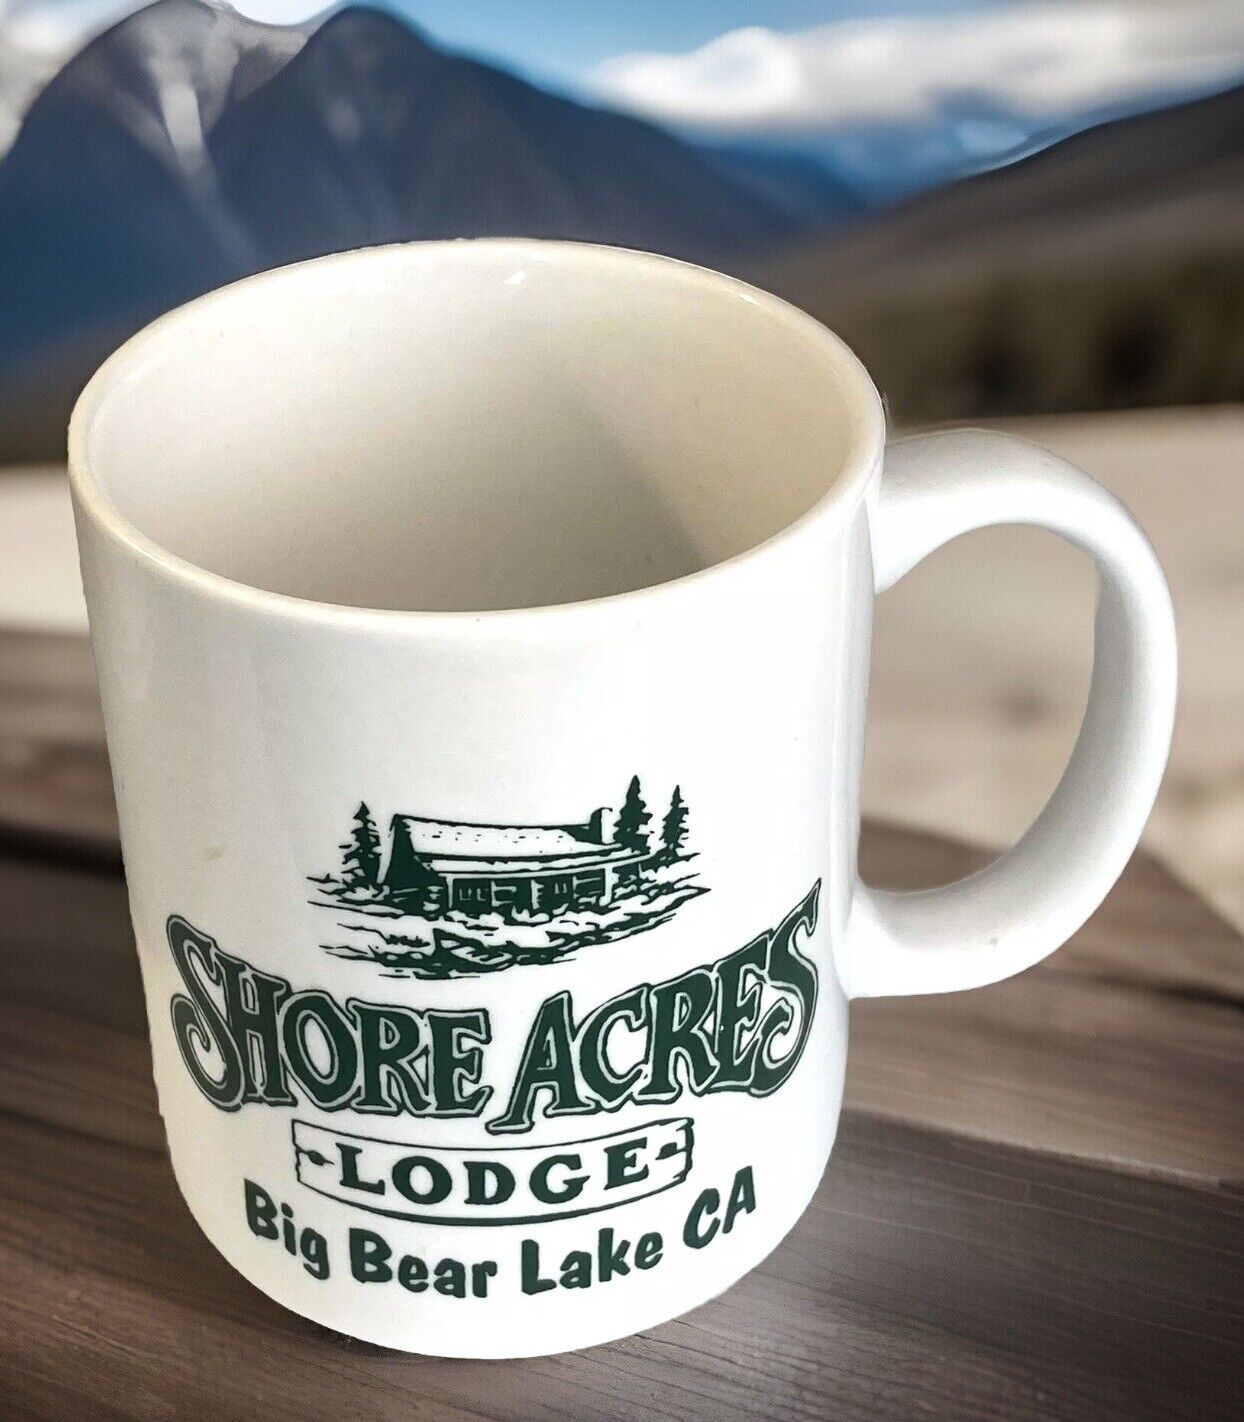 Shore Acres Lodge Big Bear Lake CA California White Green Letters Coffee Mug Cup